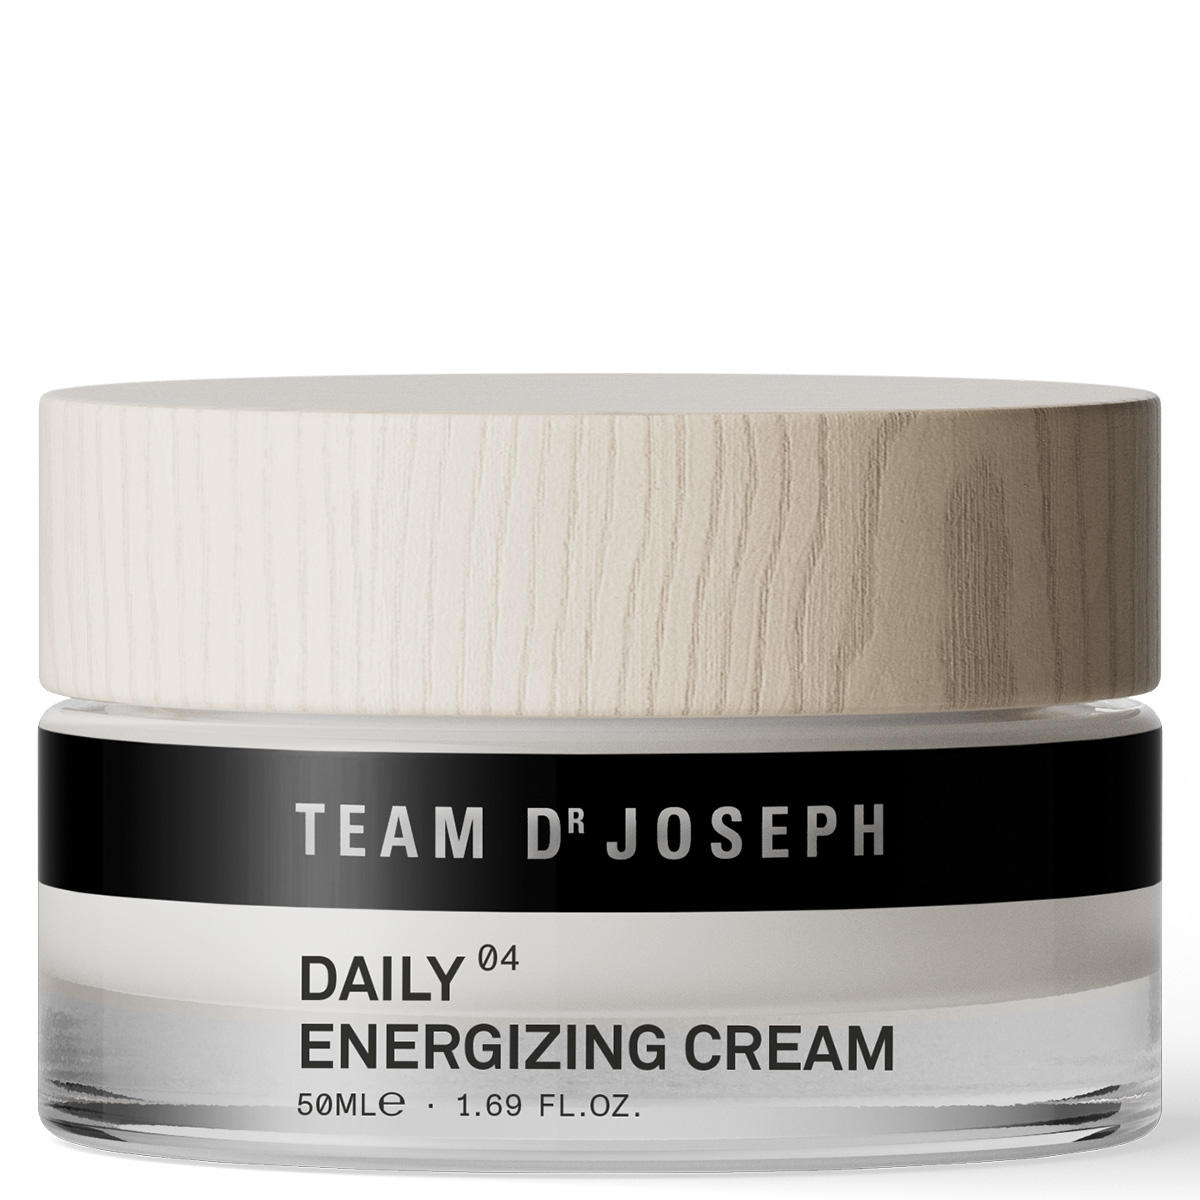 TEAM DR JOSEPH Daily Energizing Cream 50 ml - 1